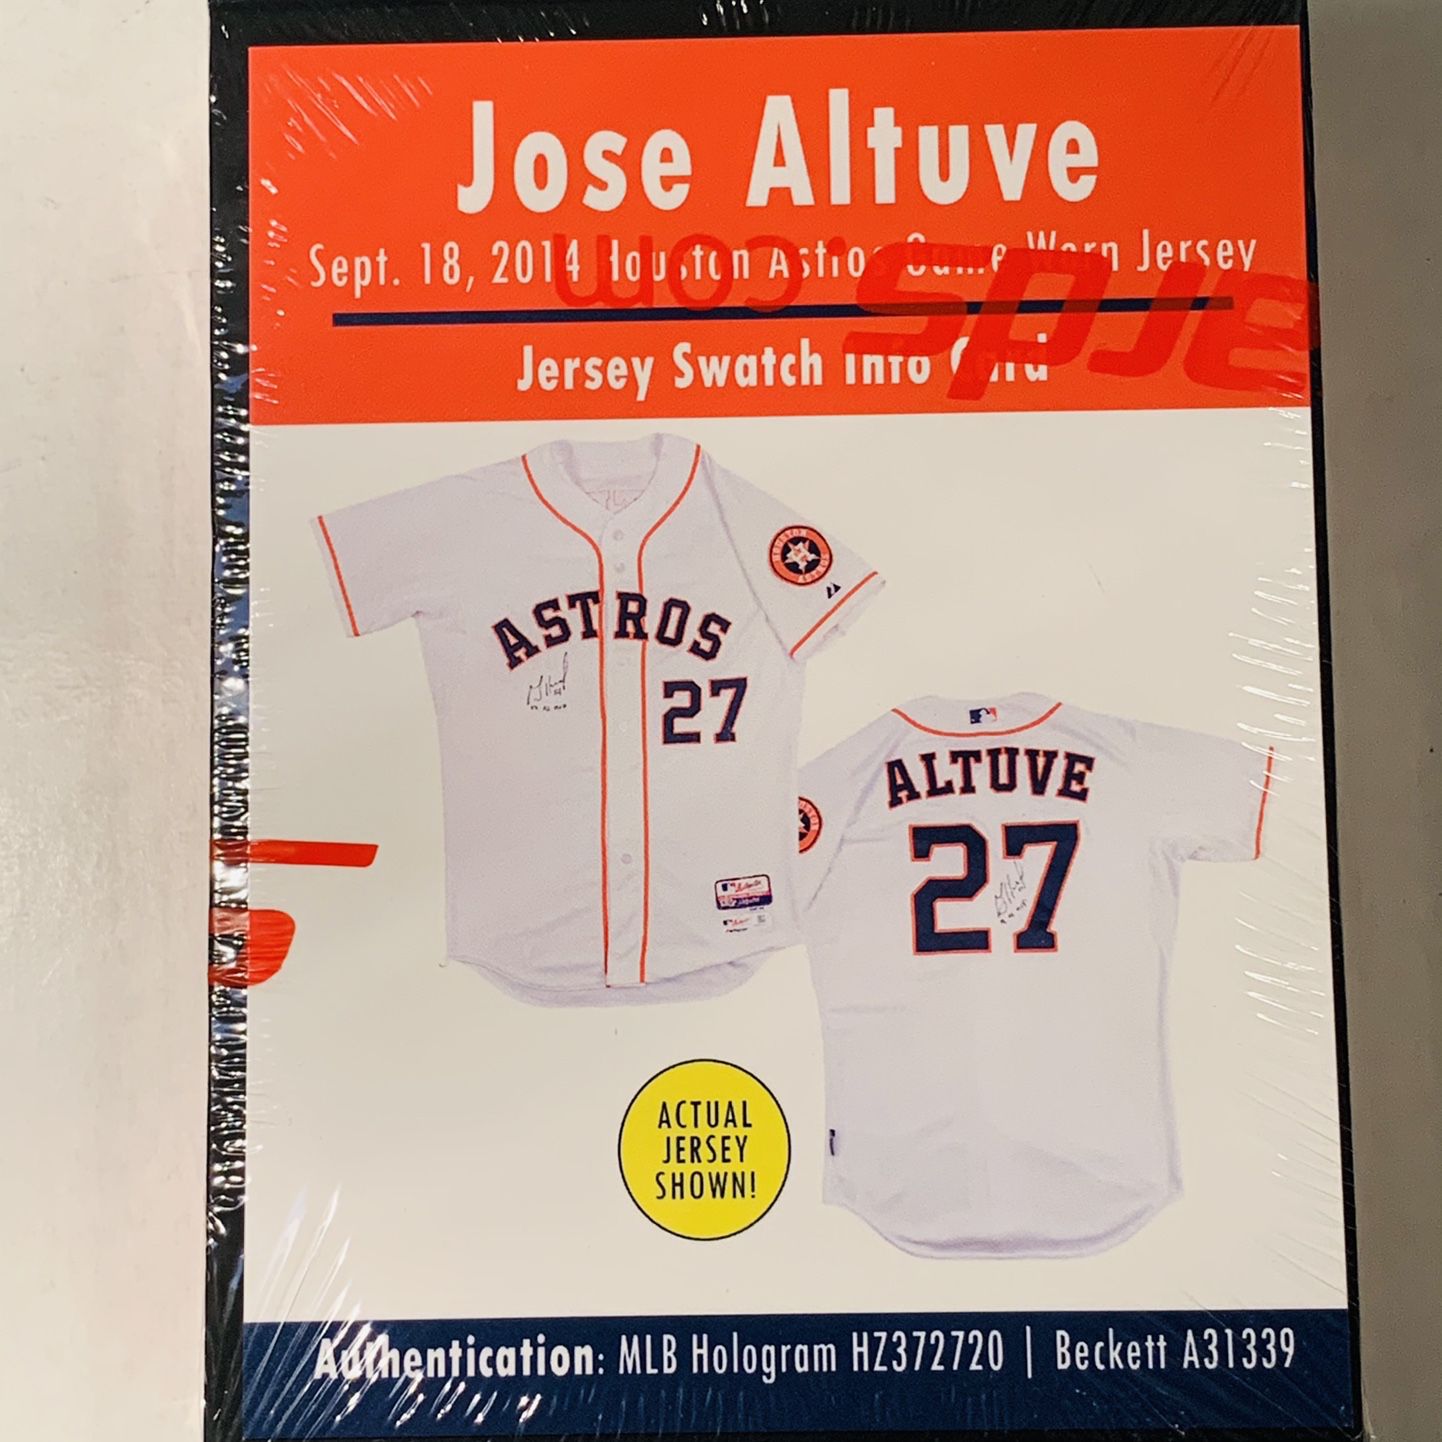 ALTUVE, ASTROS JERSEY for Sale in San Antonio, TX - OfferUp